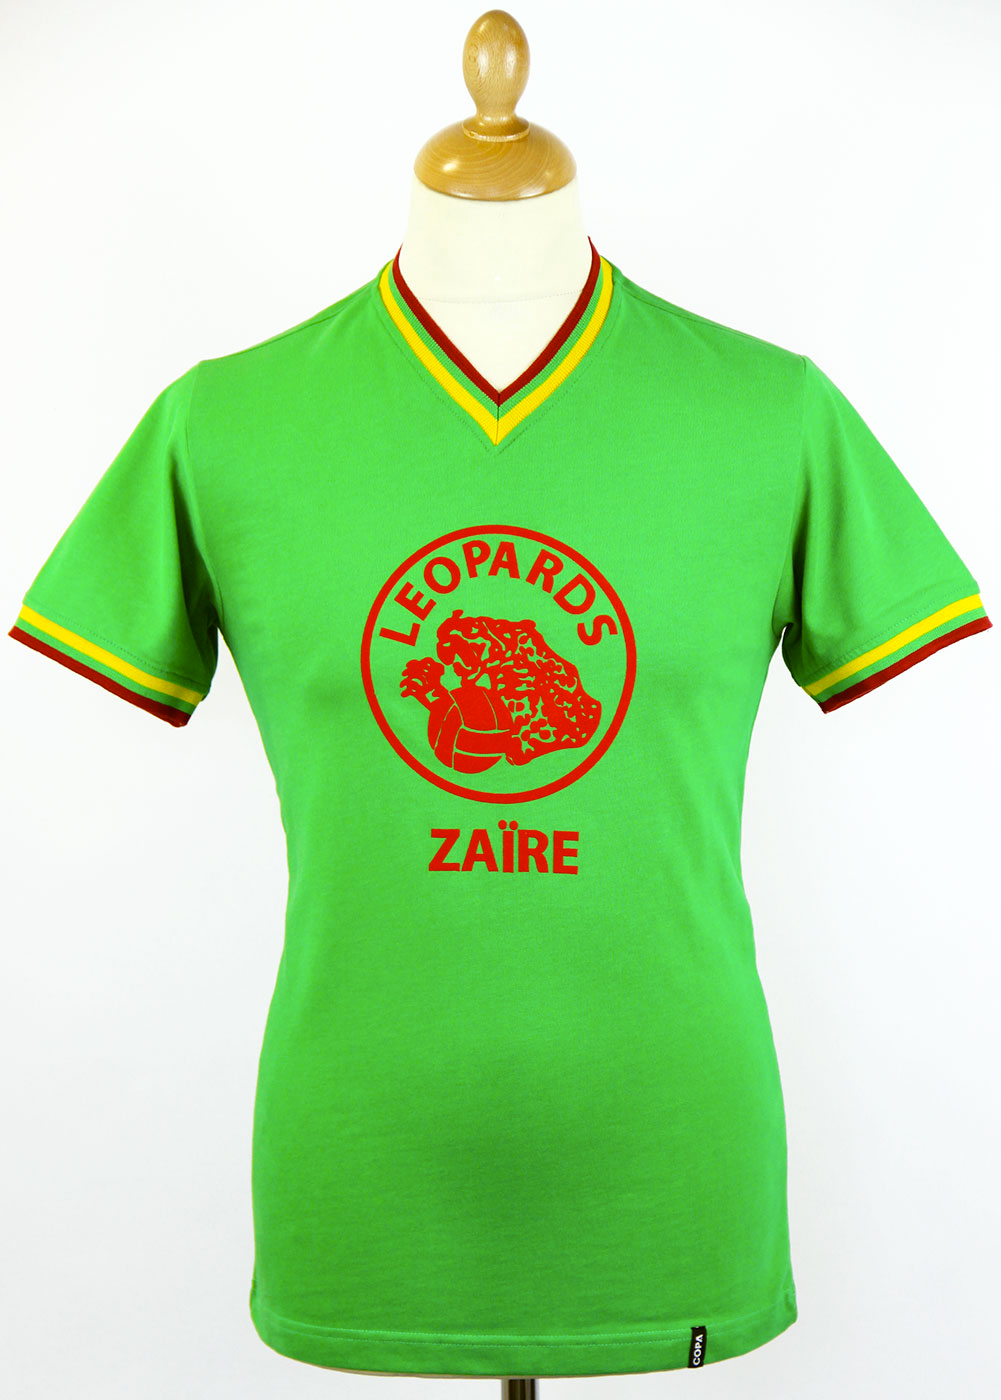 Zaire COPA Retro 70s Indie Vintage Football Shirt